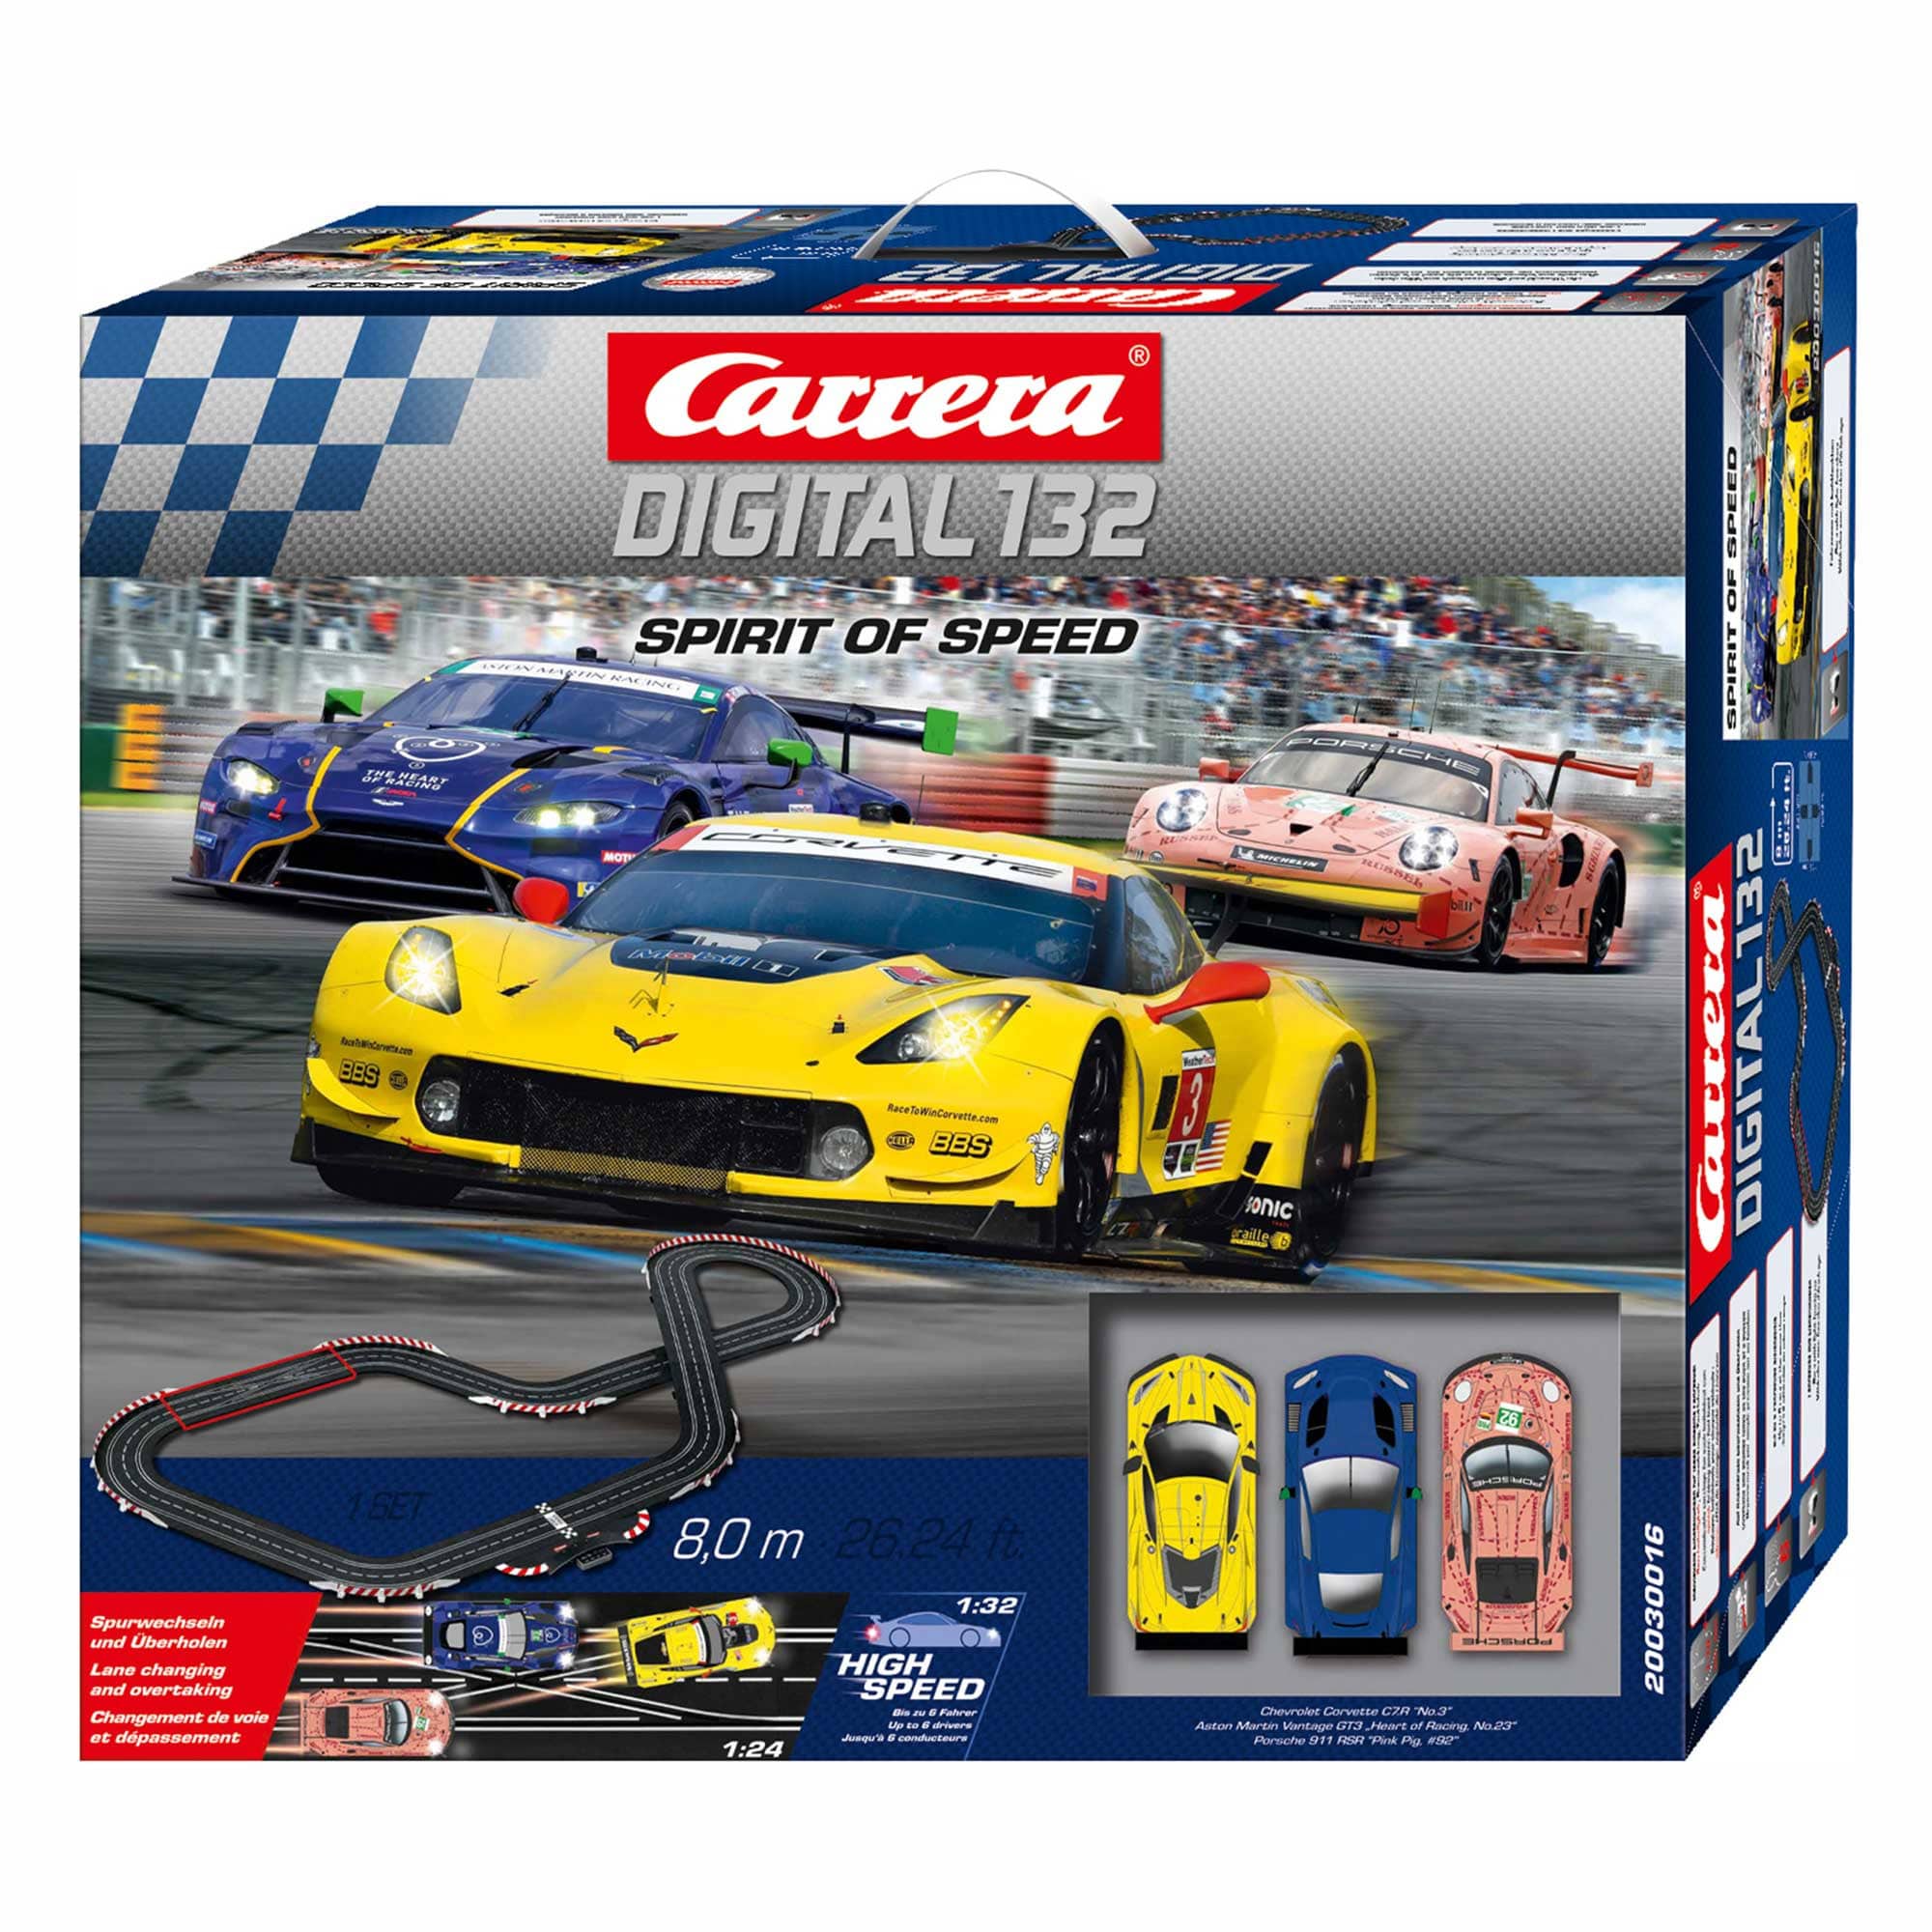 Carrera 30016 Digital 132 Spirit of Speed 3 Car Slot Car Set